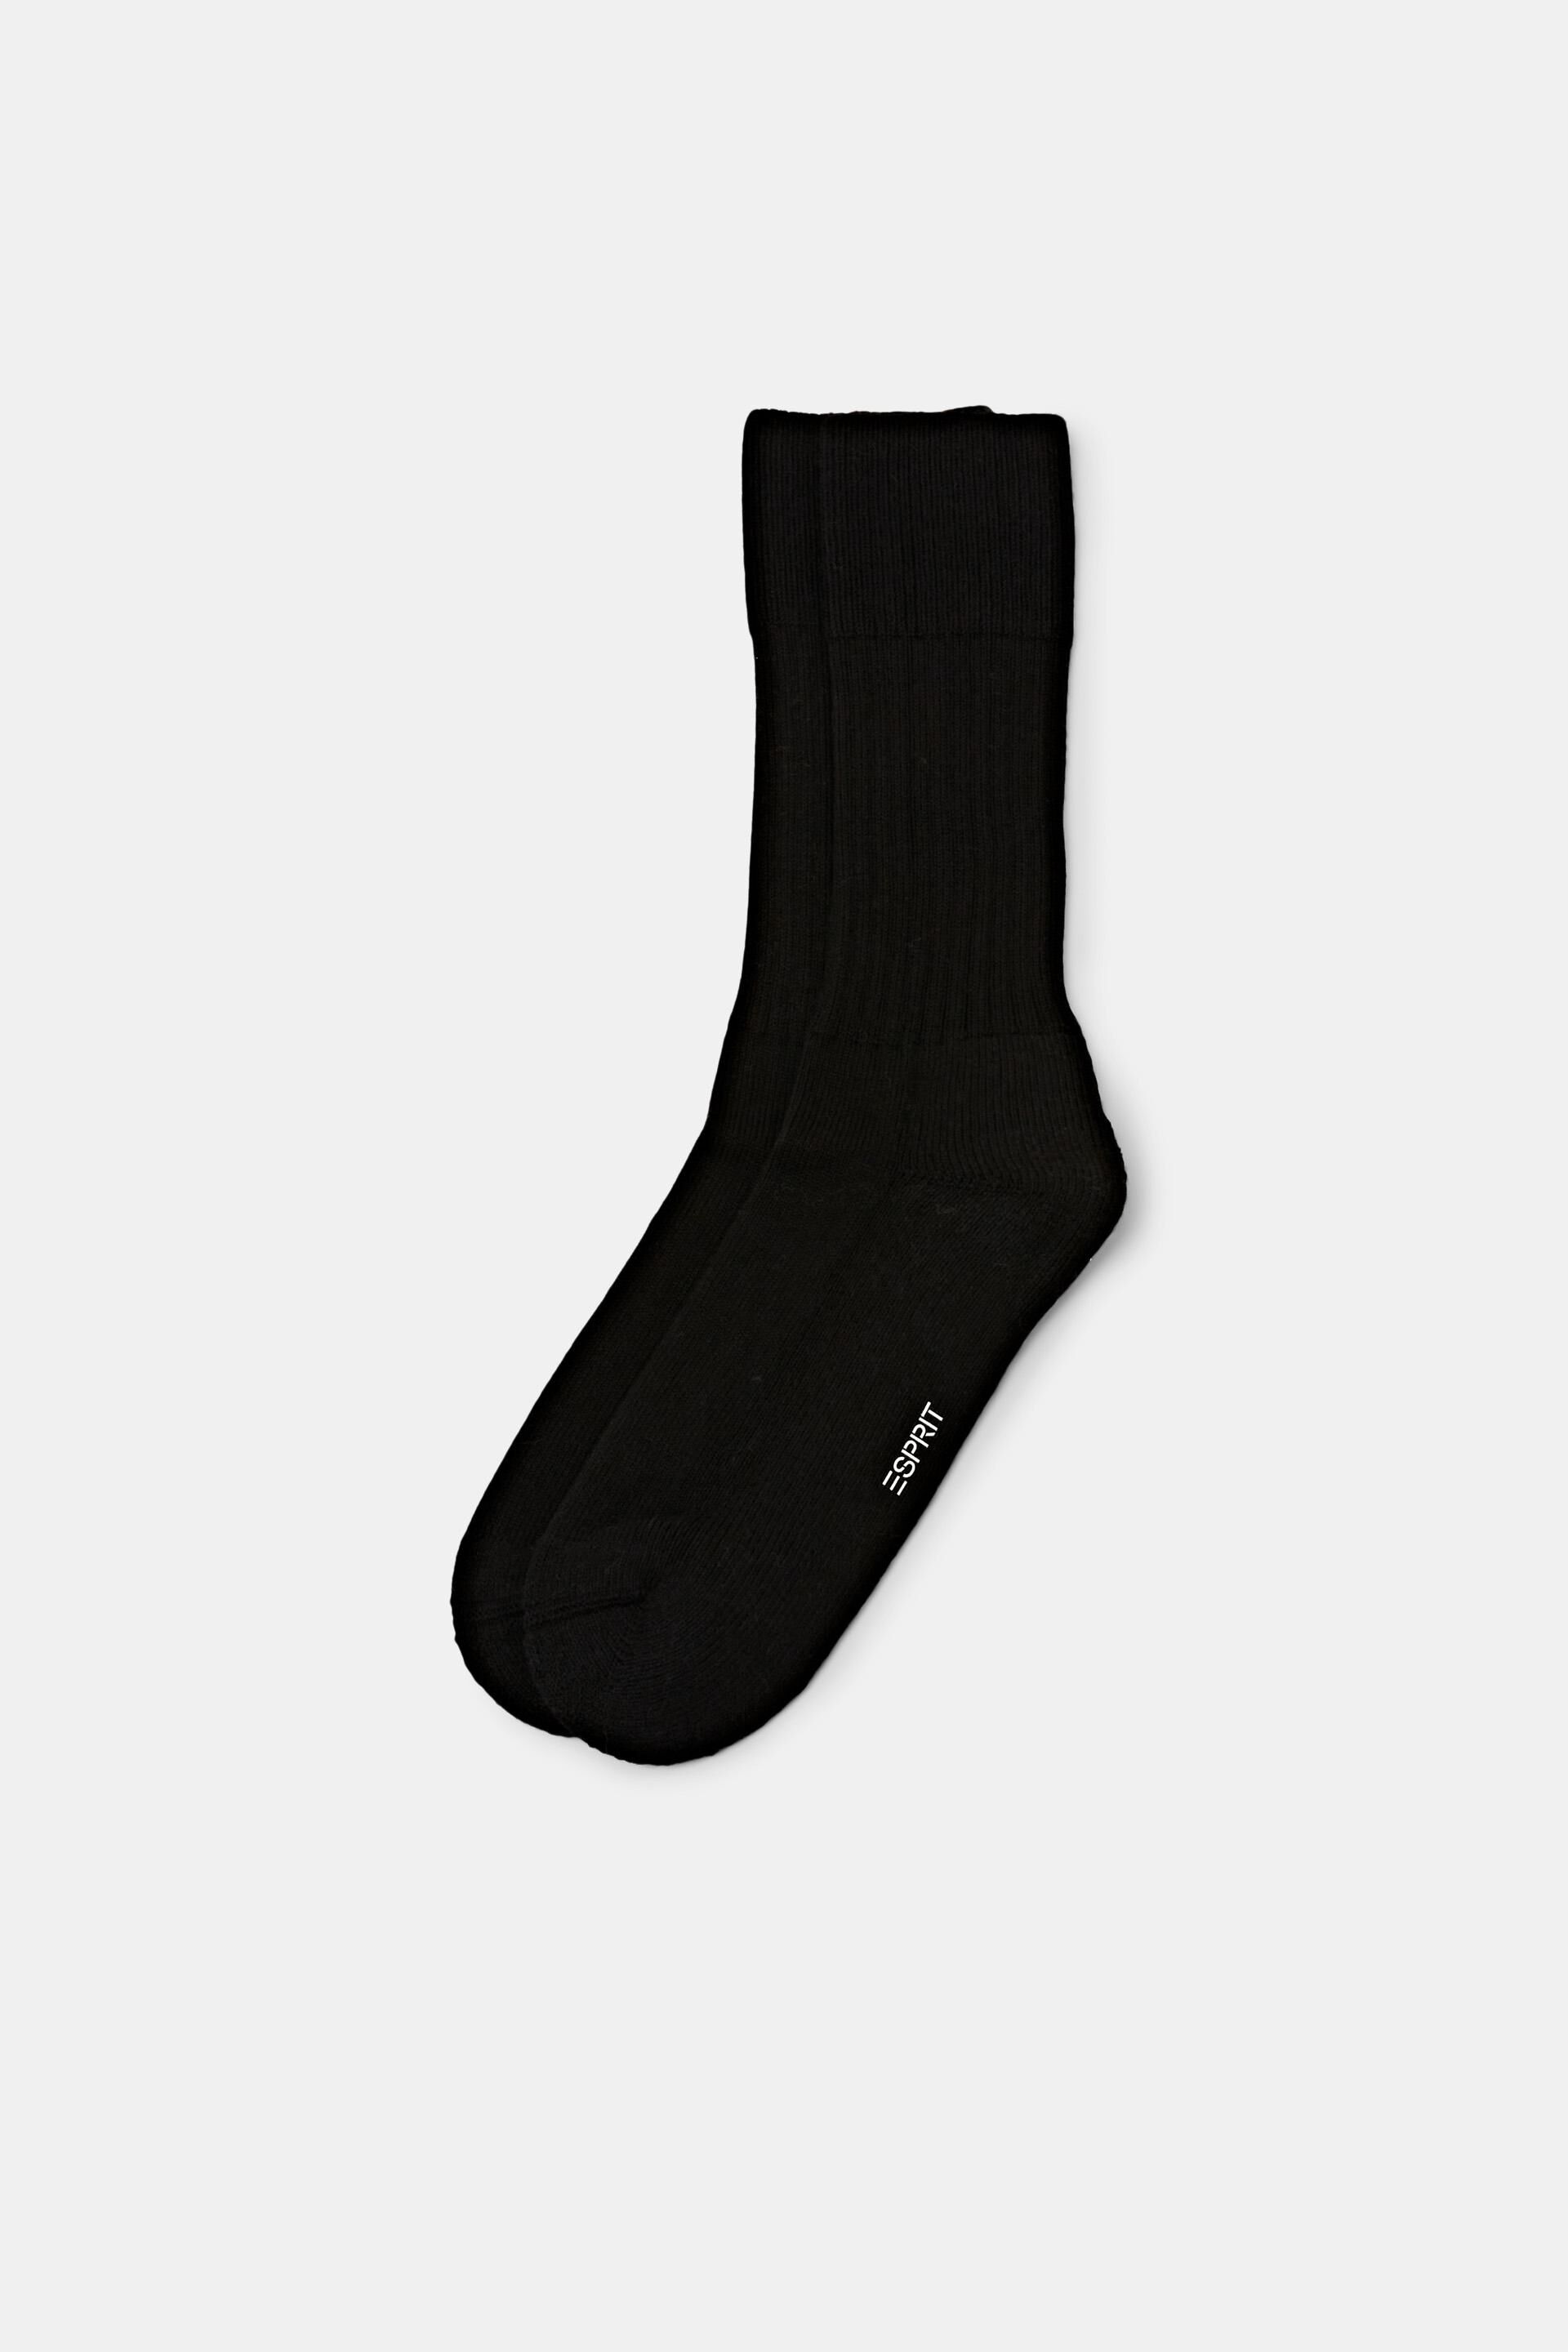 Esprit Mode Socks